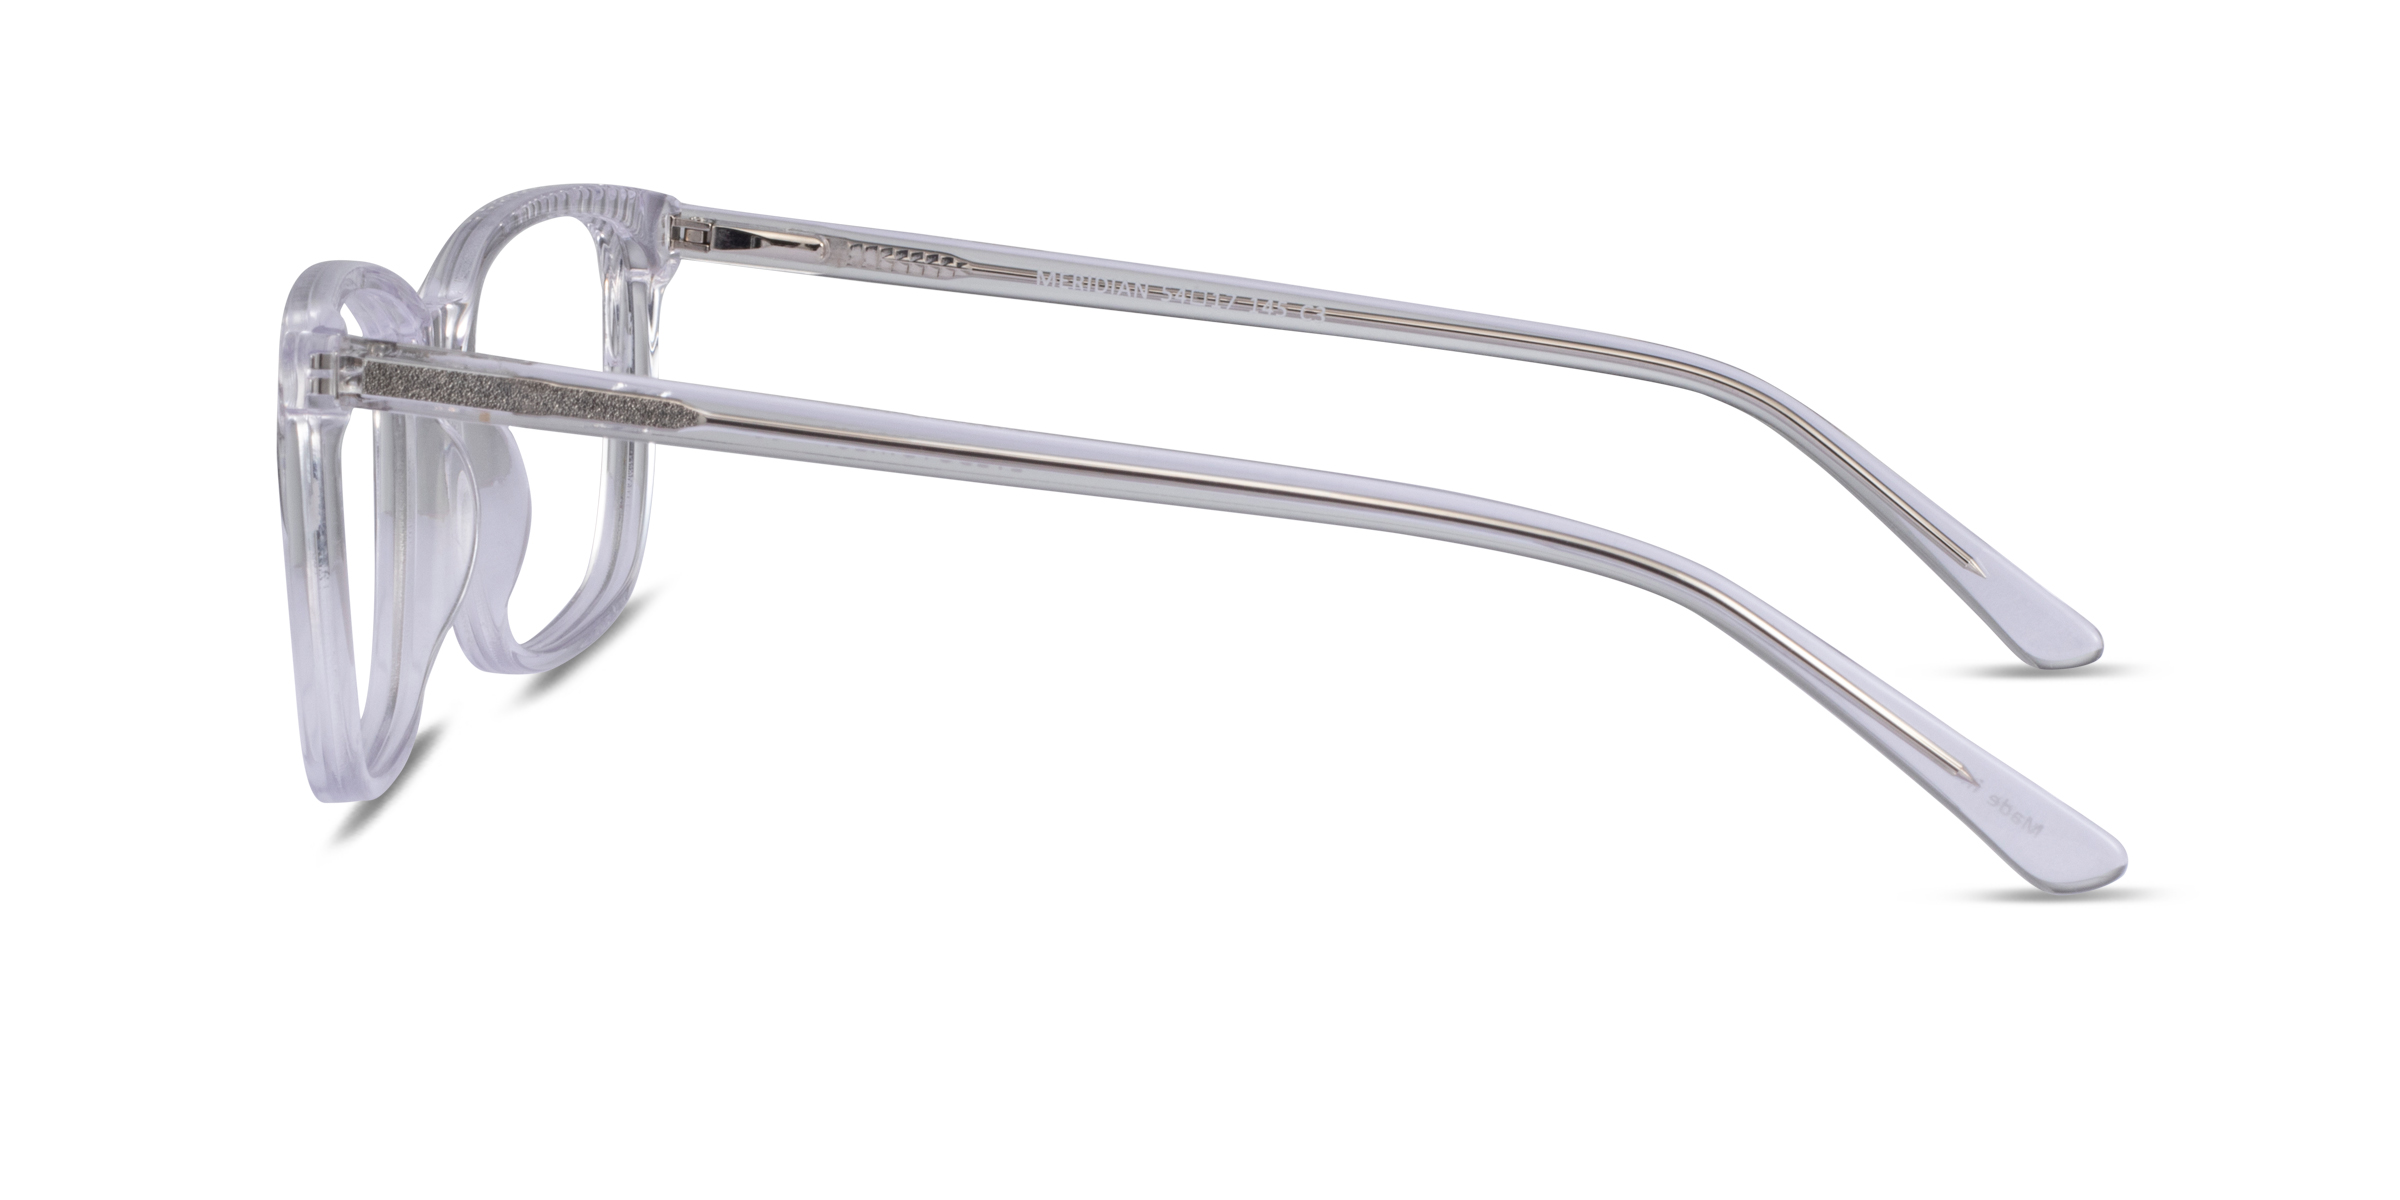 Meridian Rectangle Clear Full Rim Eyeglasses | Eyebuydirect